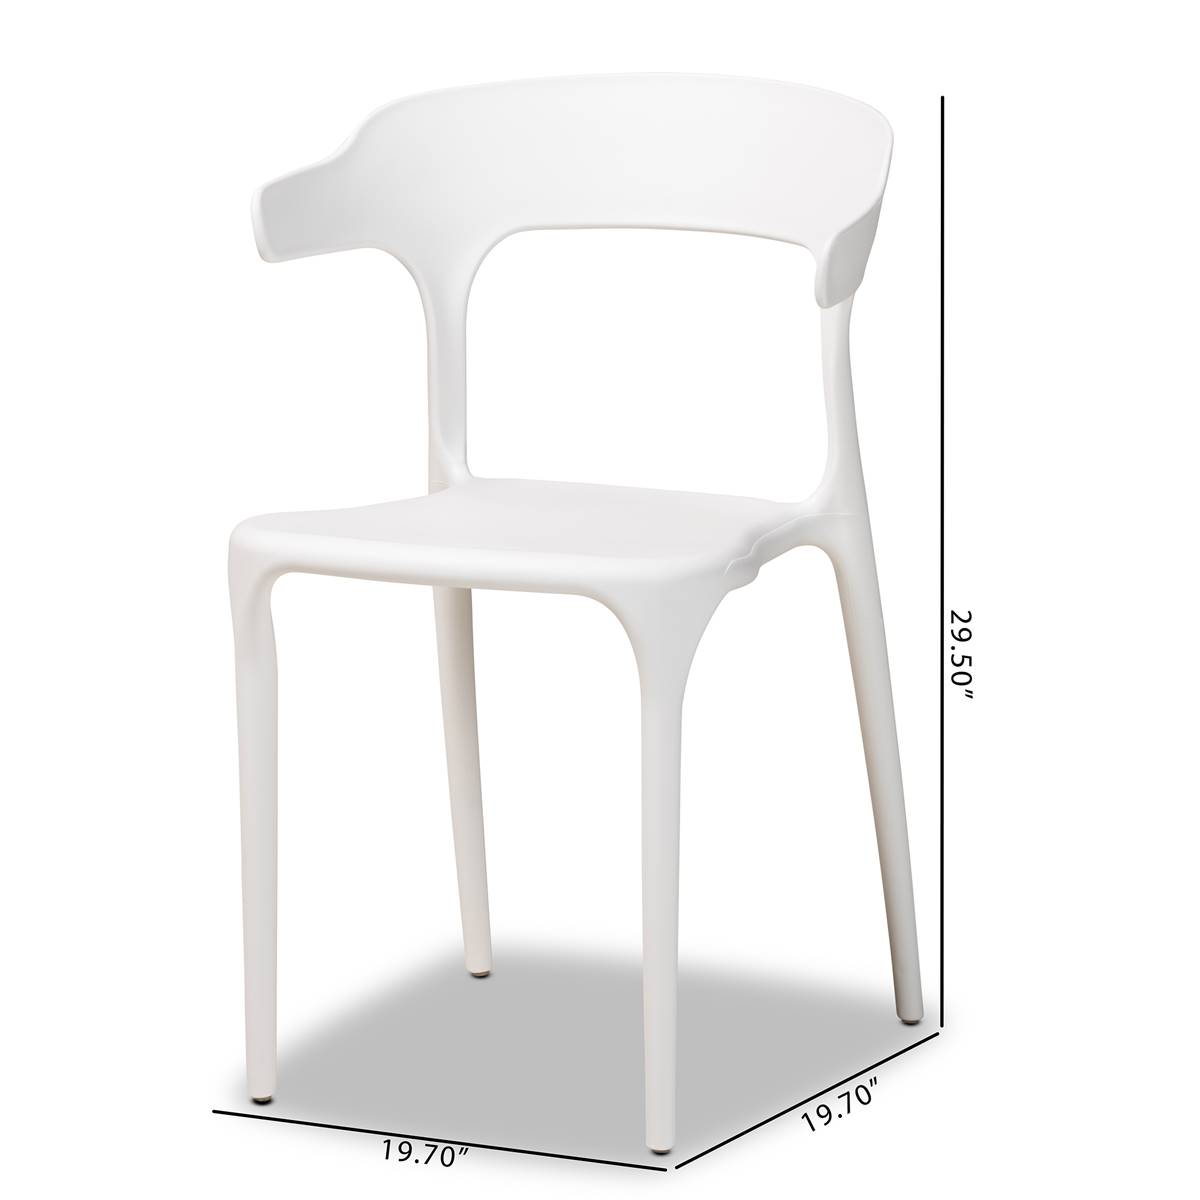 Baxton Studio Gould Modern Plastic 4pc. Dining Chair Set